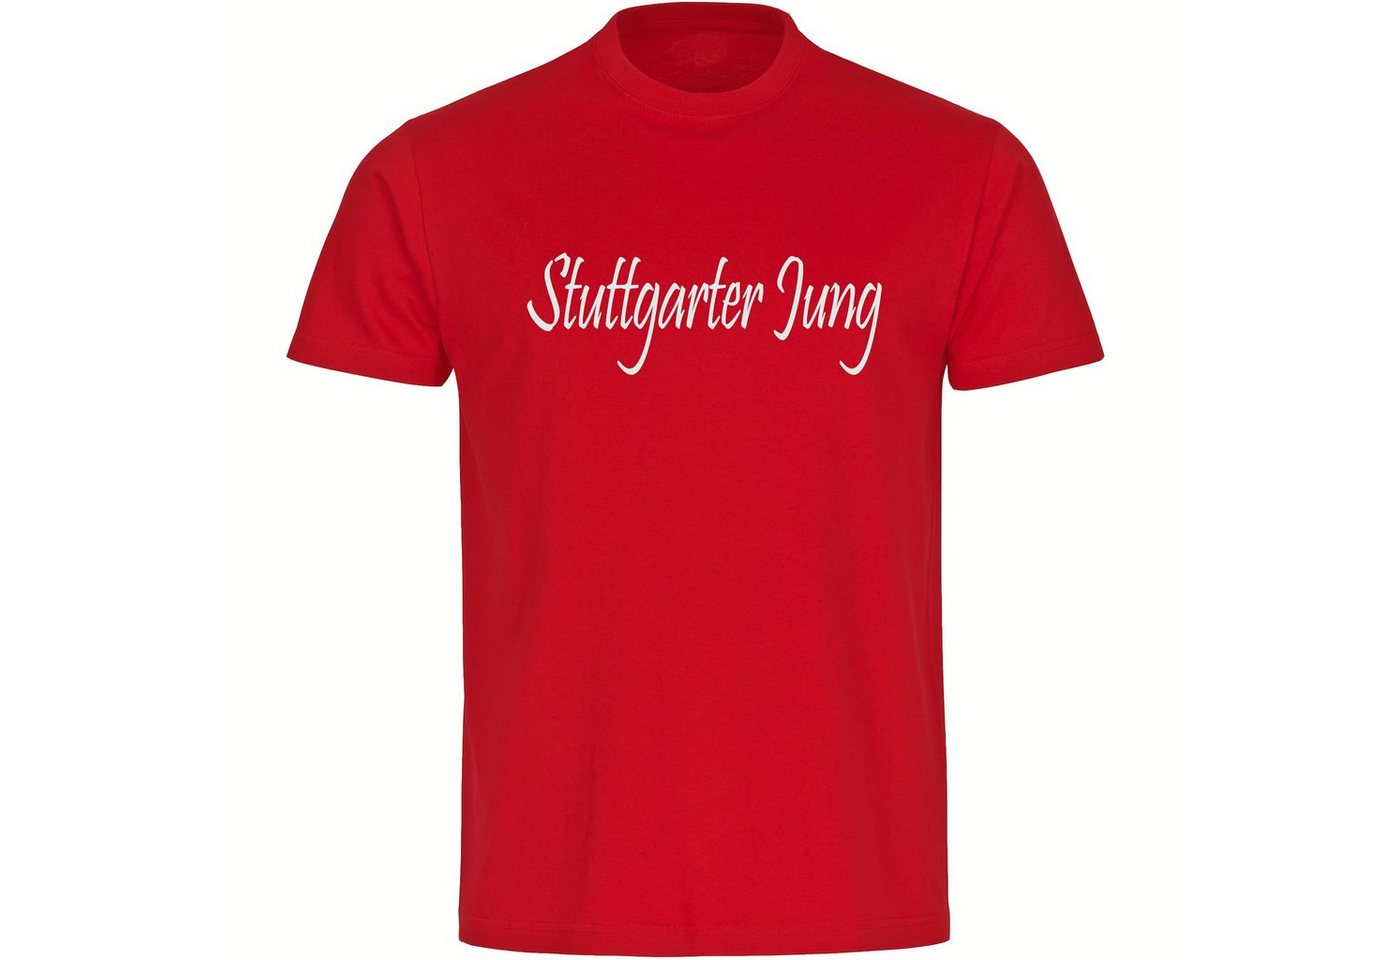 multifanshop T-Shirt Herren Stuttgart - Stuttgarter Jung - Männer von multifanshop